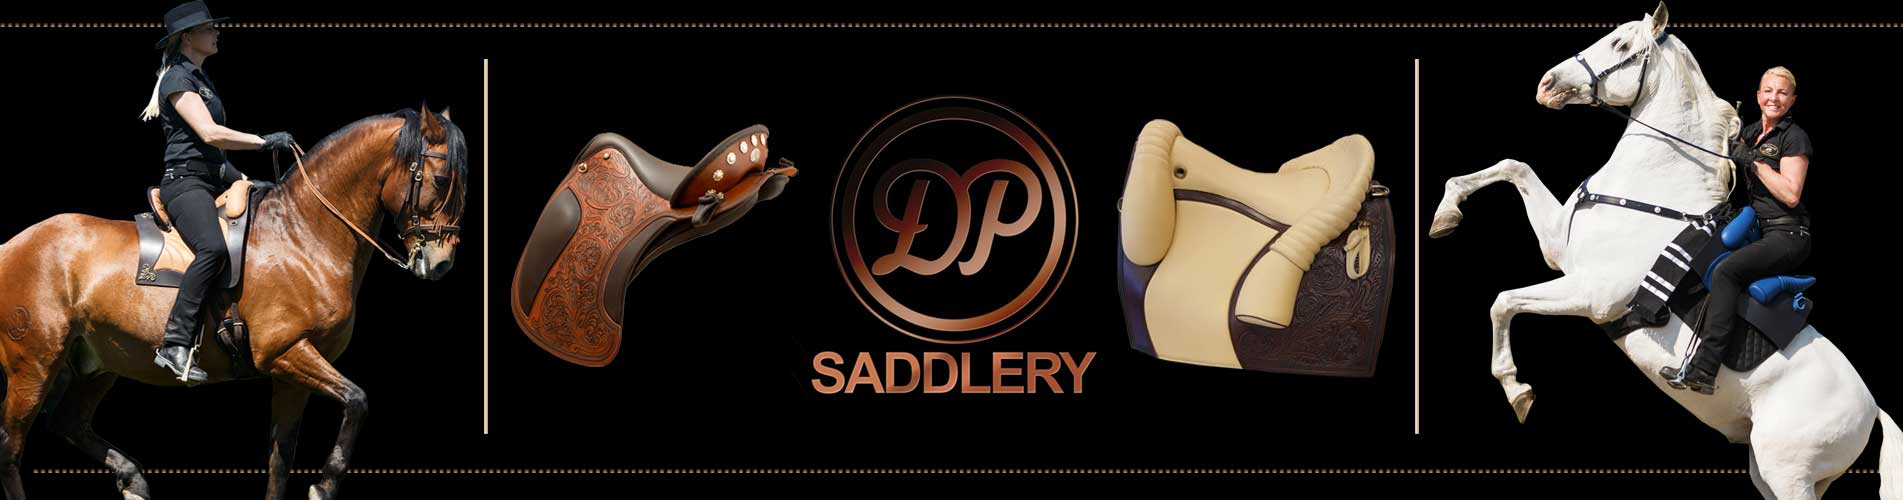 Dp Saddlery Saddles For Sale Canada